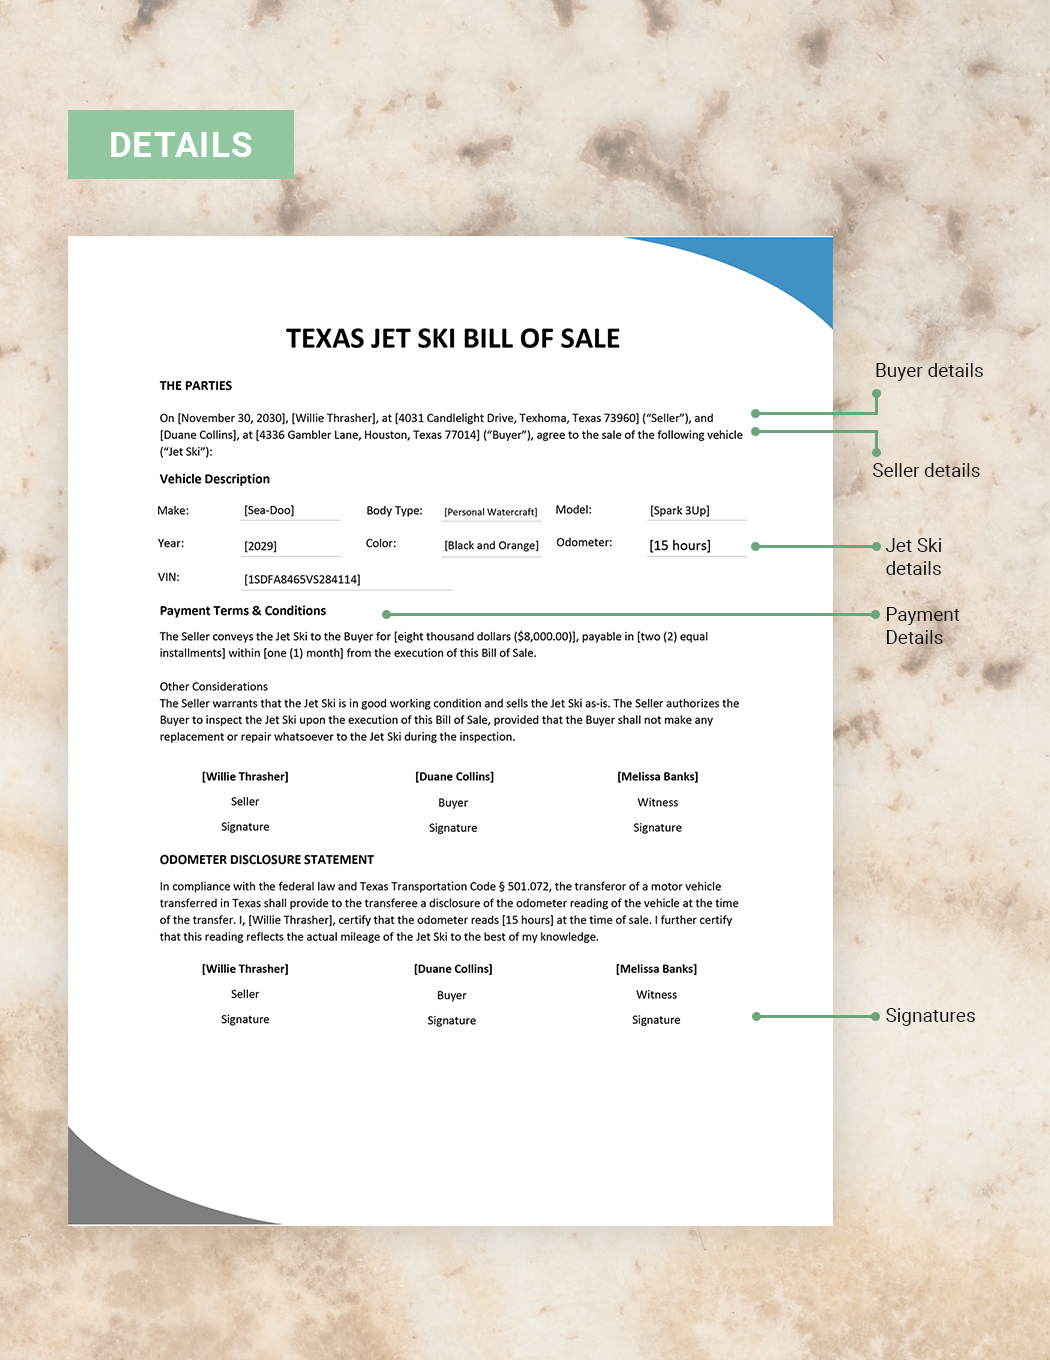 Texas Jet Ski Bill of Sale Form Template